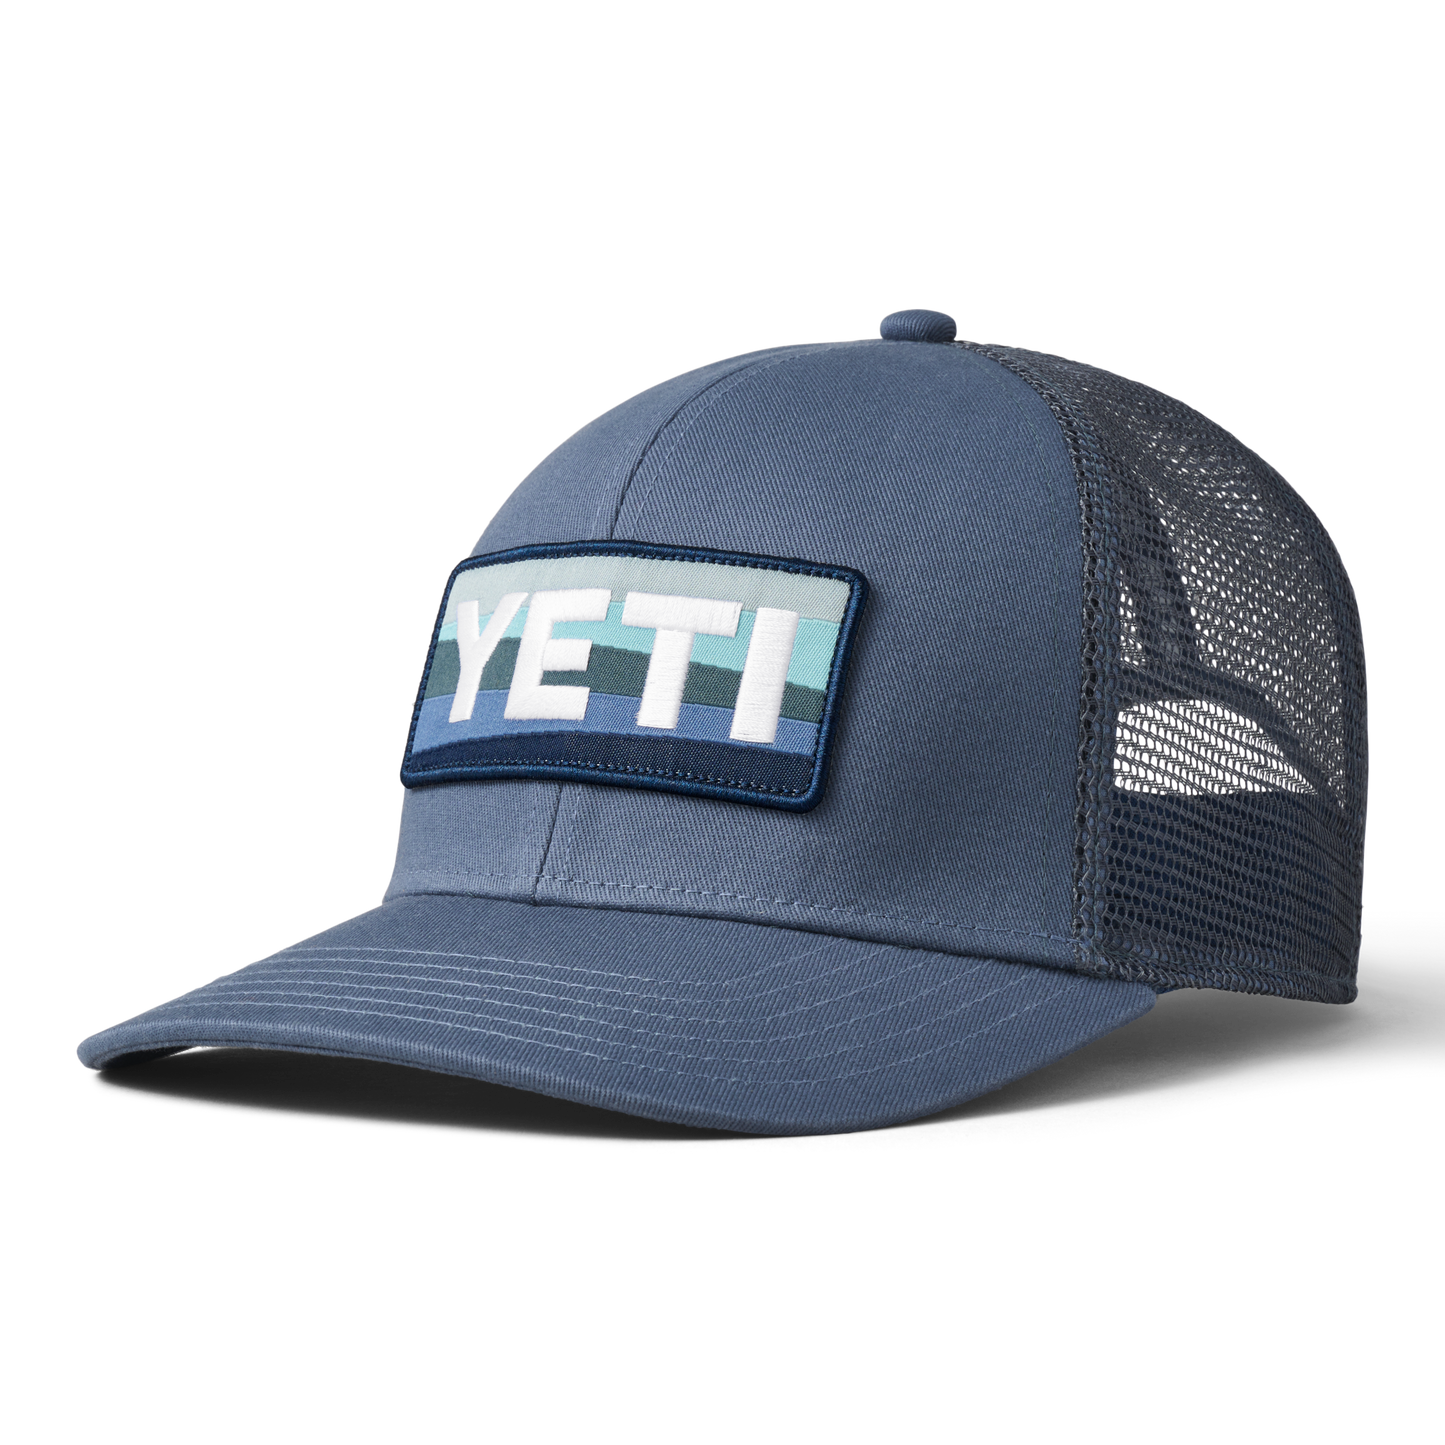 YETI Trucker-Cap mit Sonnenaufgang-Badge Deep Blue